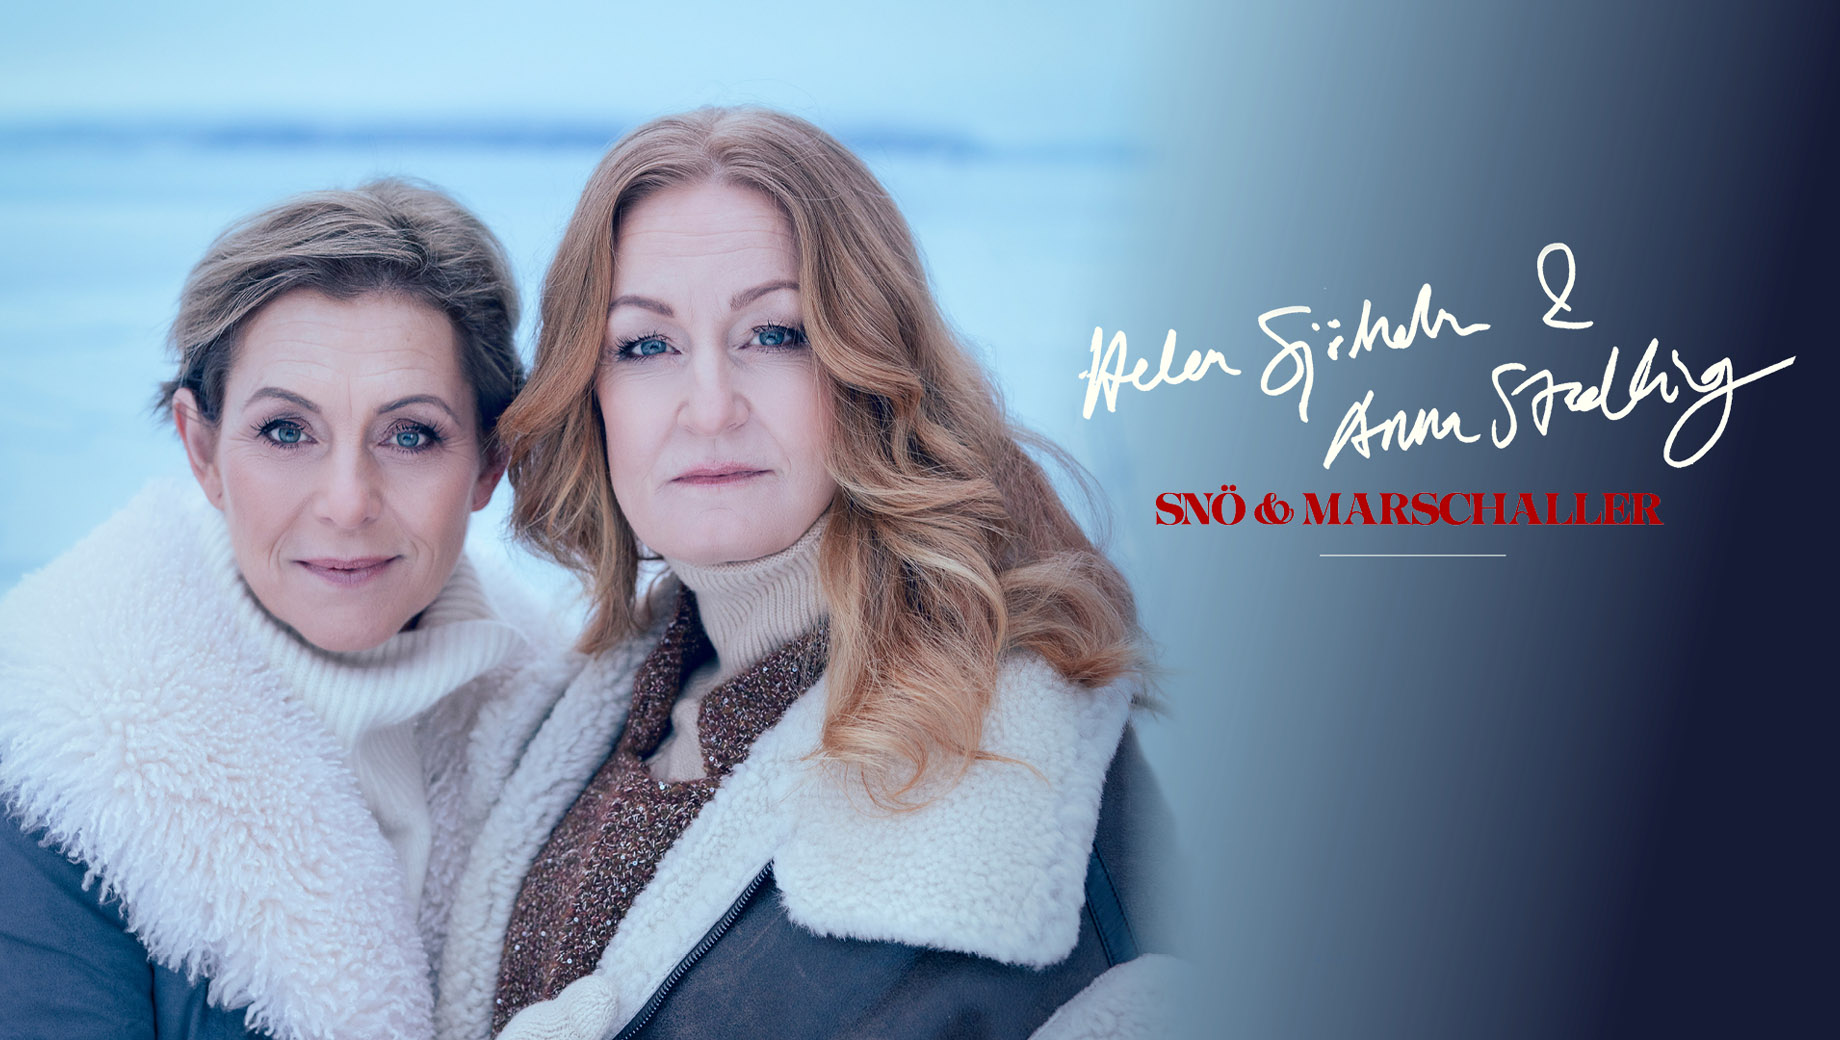 Helen Sjöholm & Anna Stadling